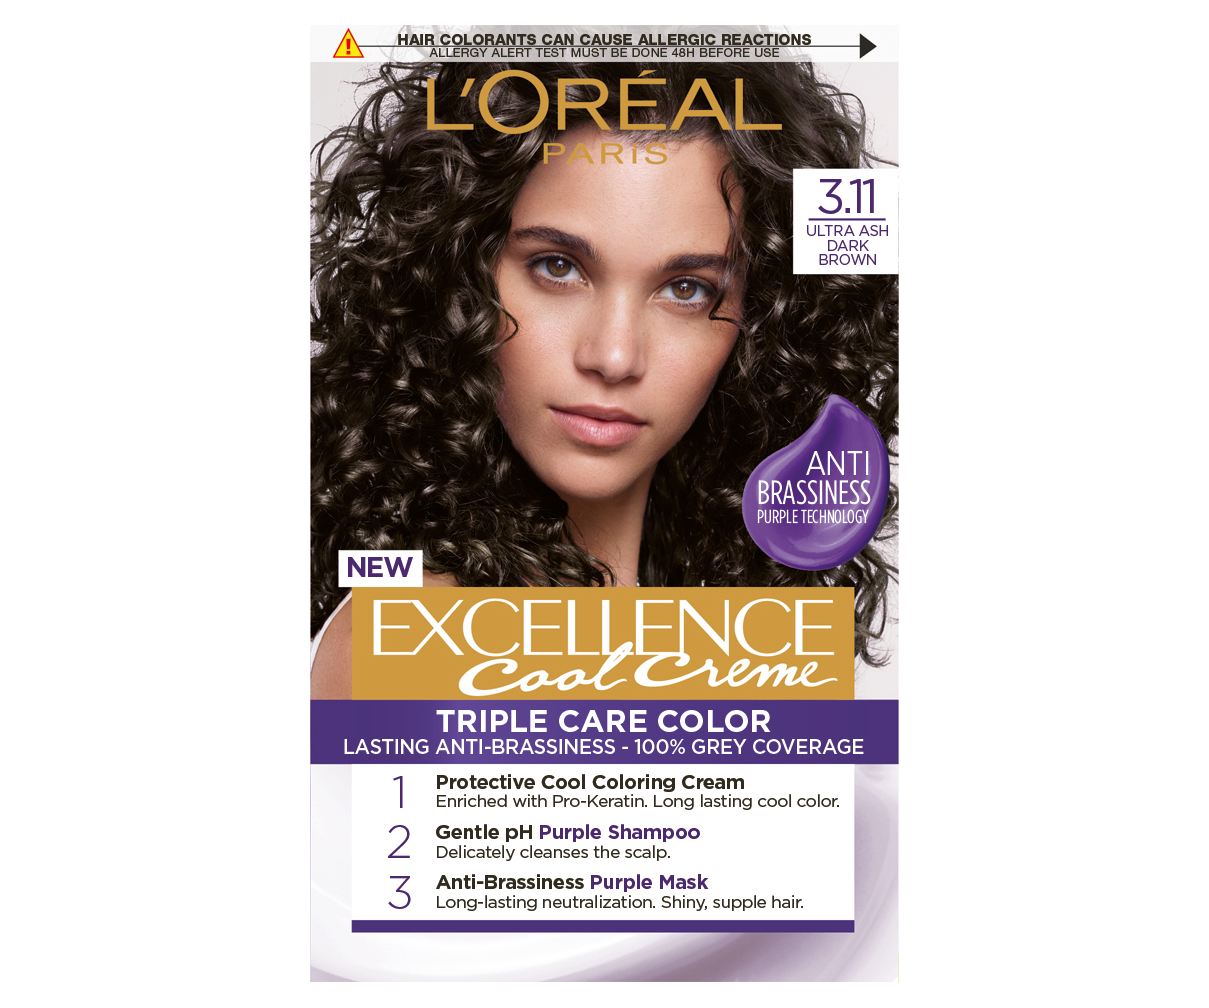 Permanentní barva Loréal Excellence Cool Creme 3.11 ultra popelavá tmavá hnědá - L’Oréal Paris + dárek zdarma